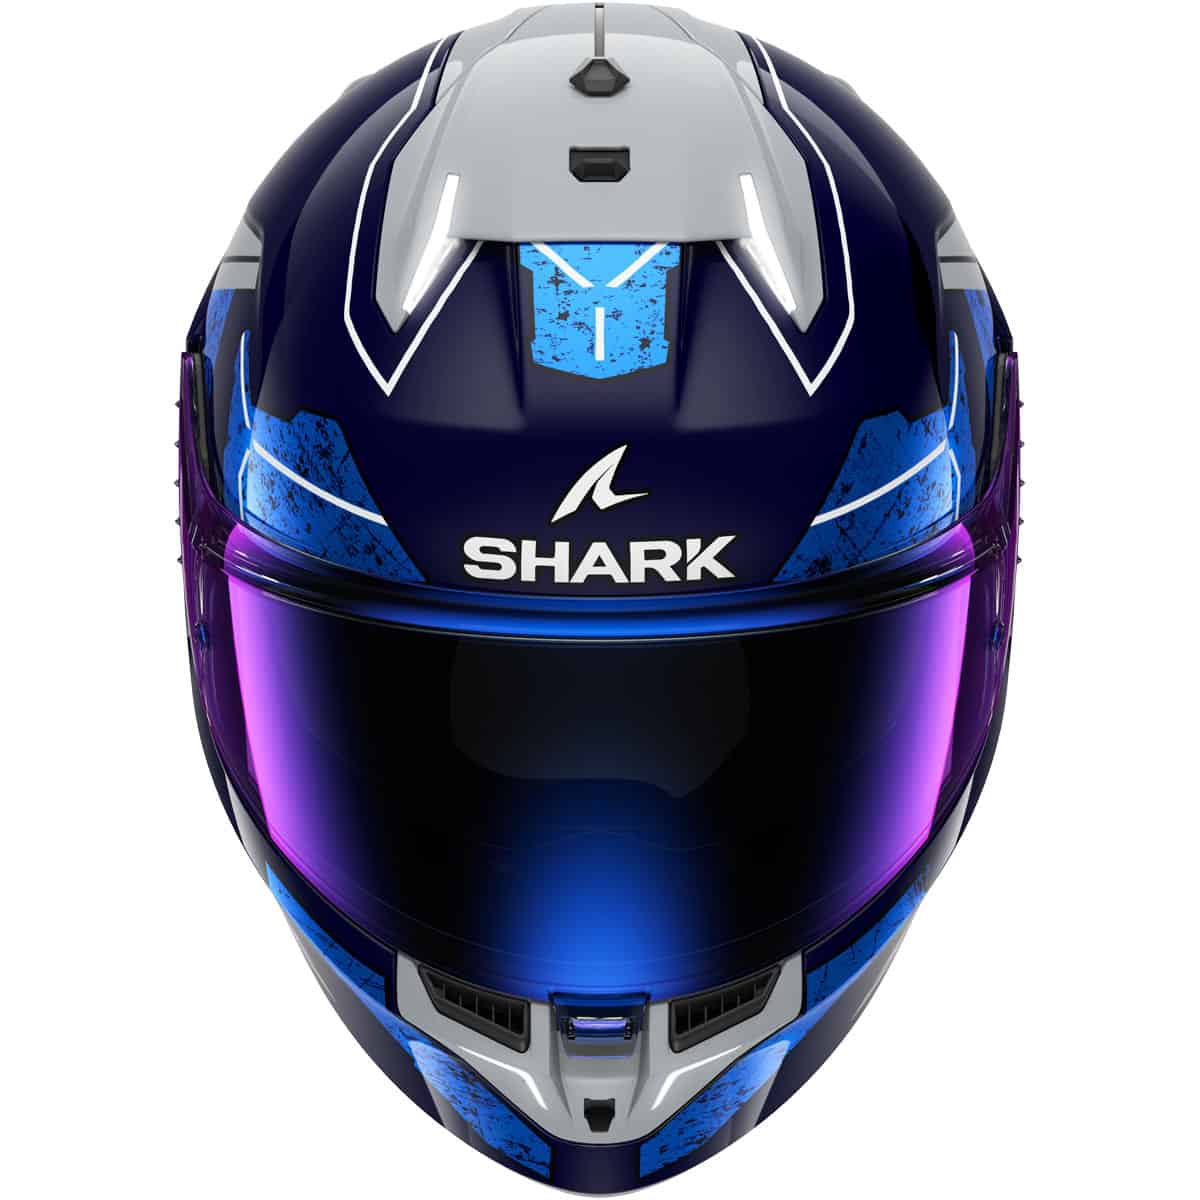 The Shark Skwal i3 helmet is the world's 1st helmet with integrated brake lights. Discover the revolutionary Shark Skwal i3 helmet 3